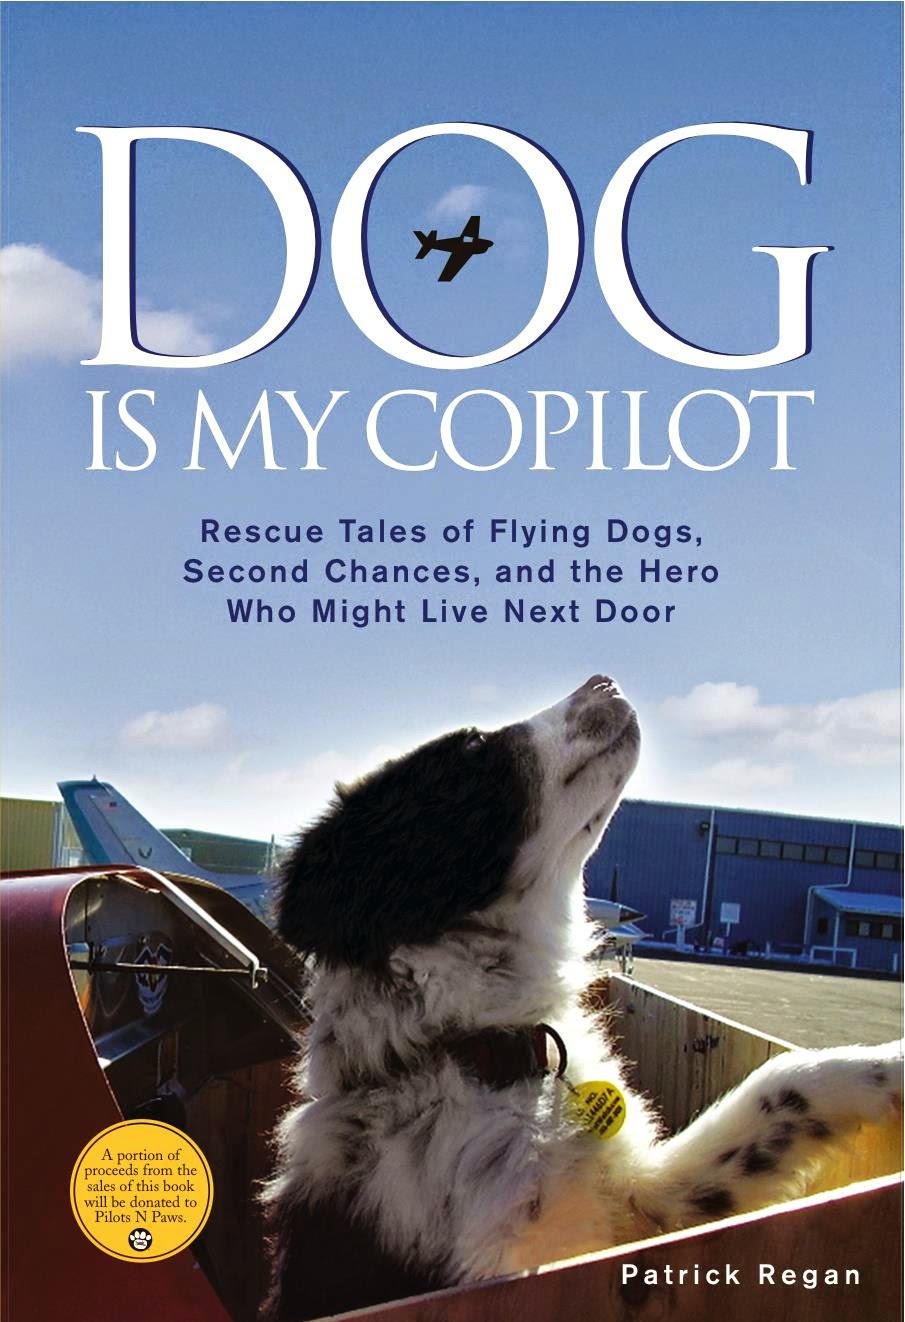 Book my dog. Diensthunde книга. Собаки герои книг. Paw Pilot. Diensthunde книга о собаках на английском.